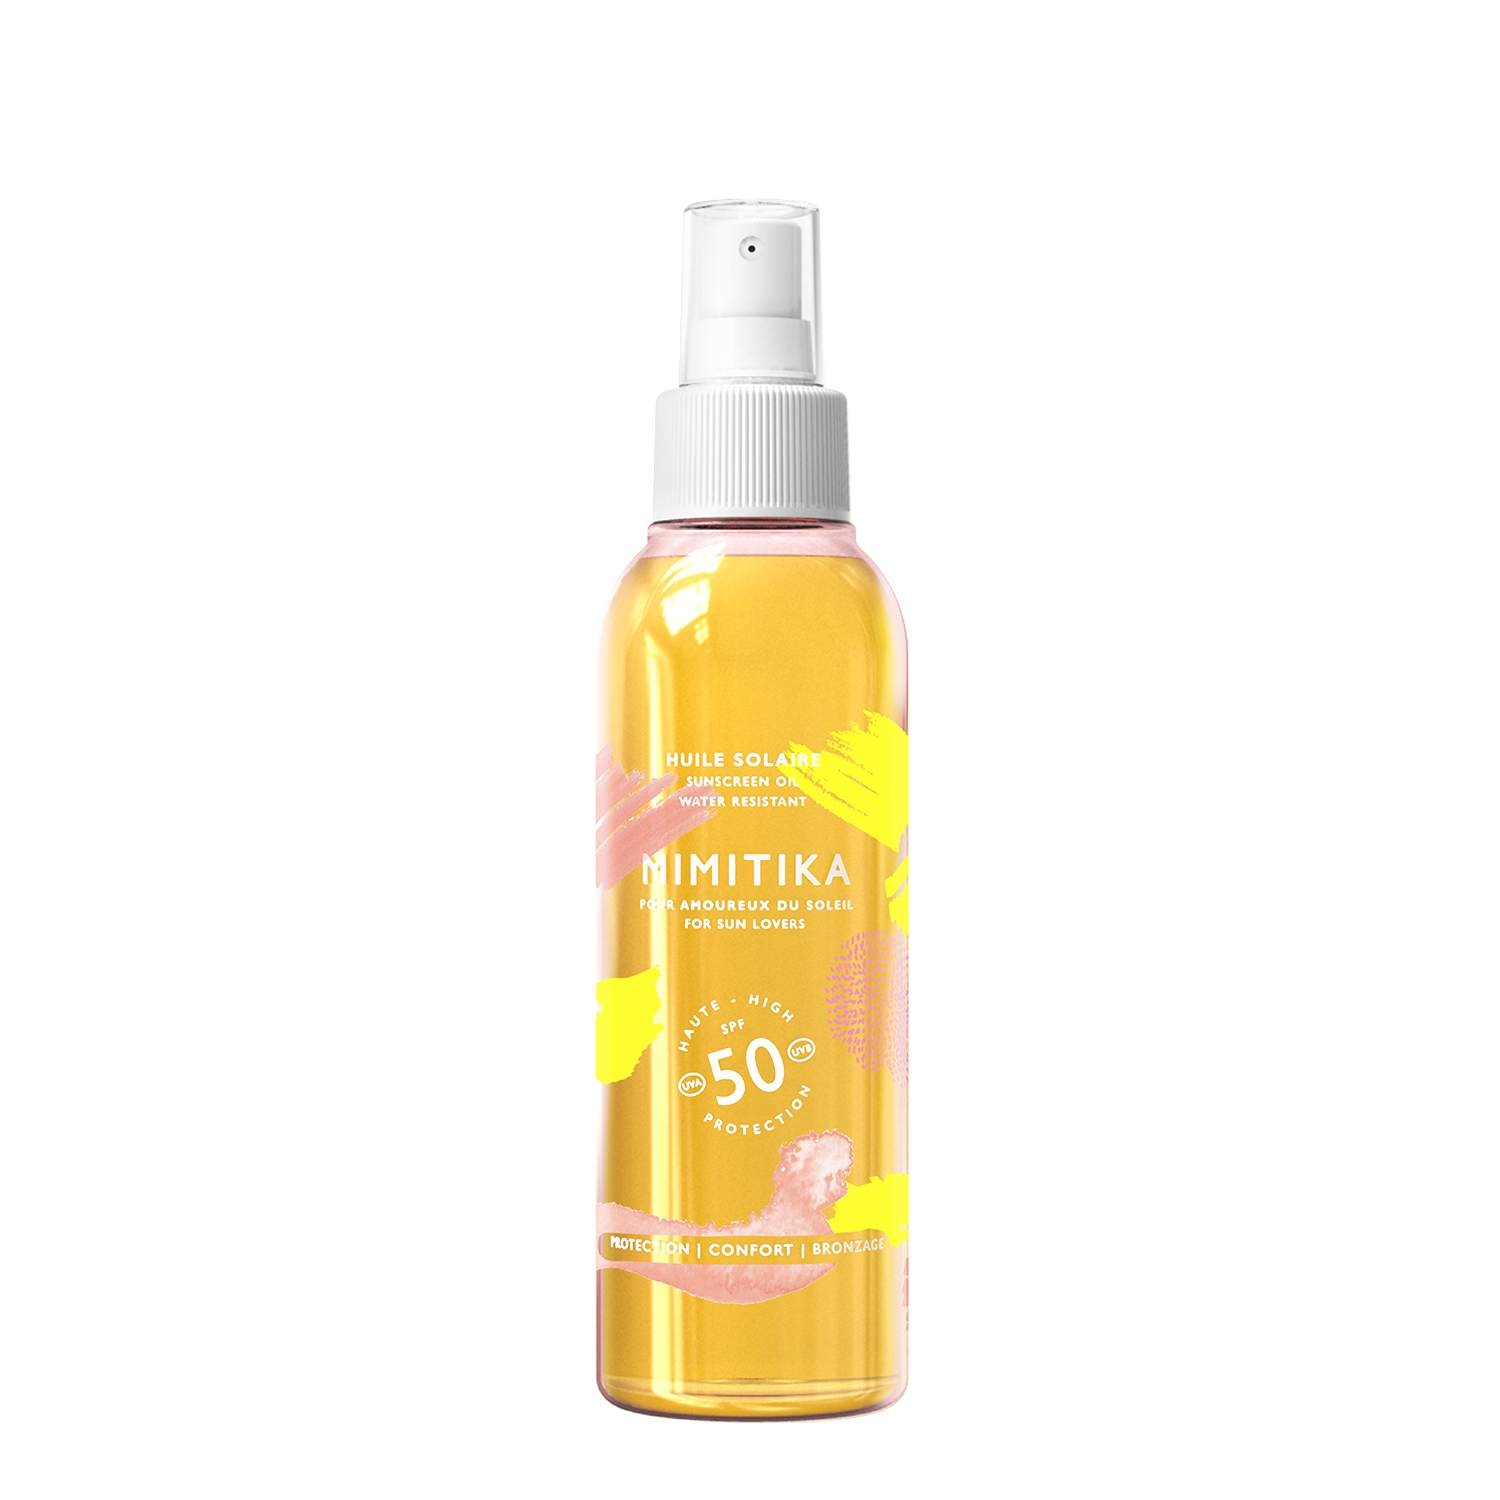 MIMITIKA SPF50 Sunscreen Body Oil